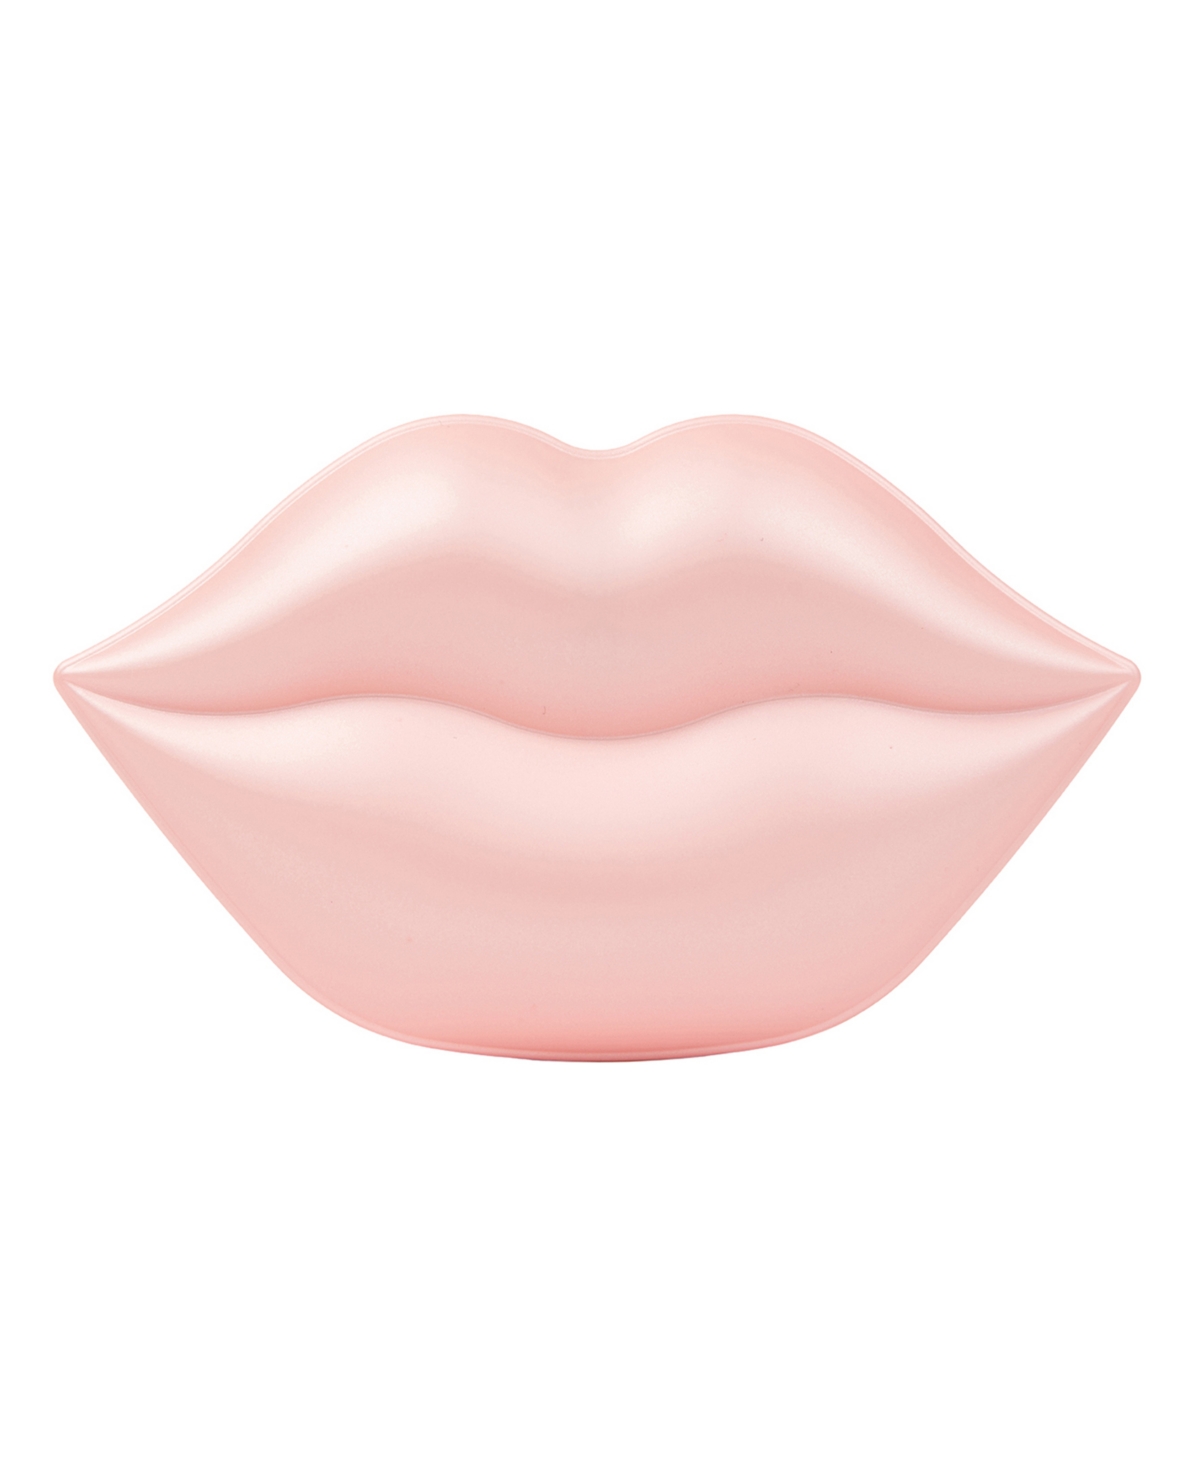 Cherry Blossom Lip Mask - Pink